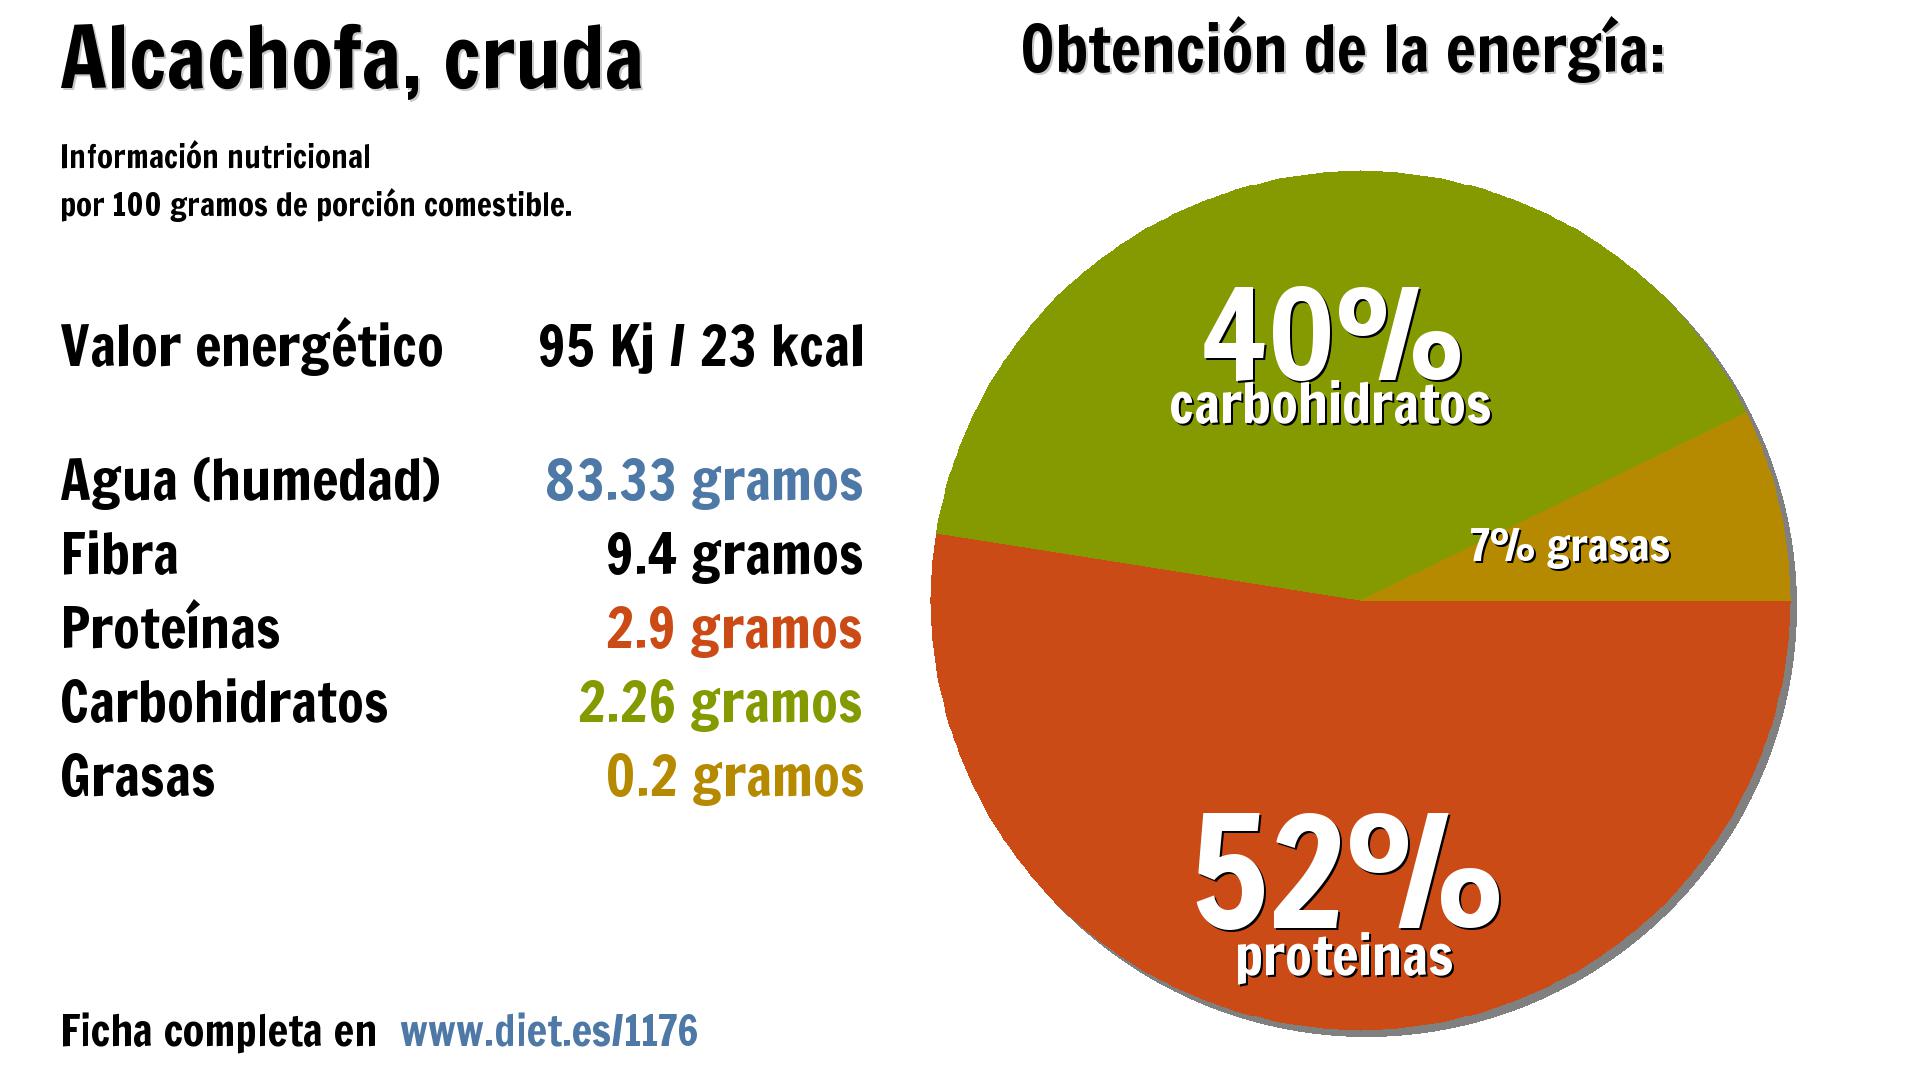 Alcachofa, cruda: energía 95 Kj, agua 83 g., fibra 9 g., proteínas 3 g. y carbohidratos 2 g.